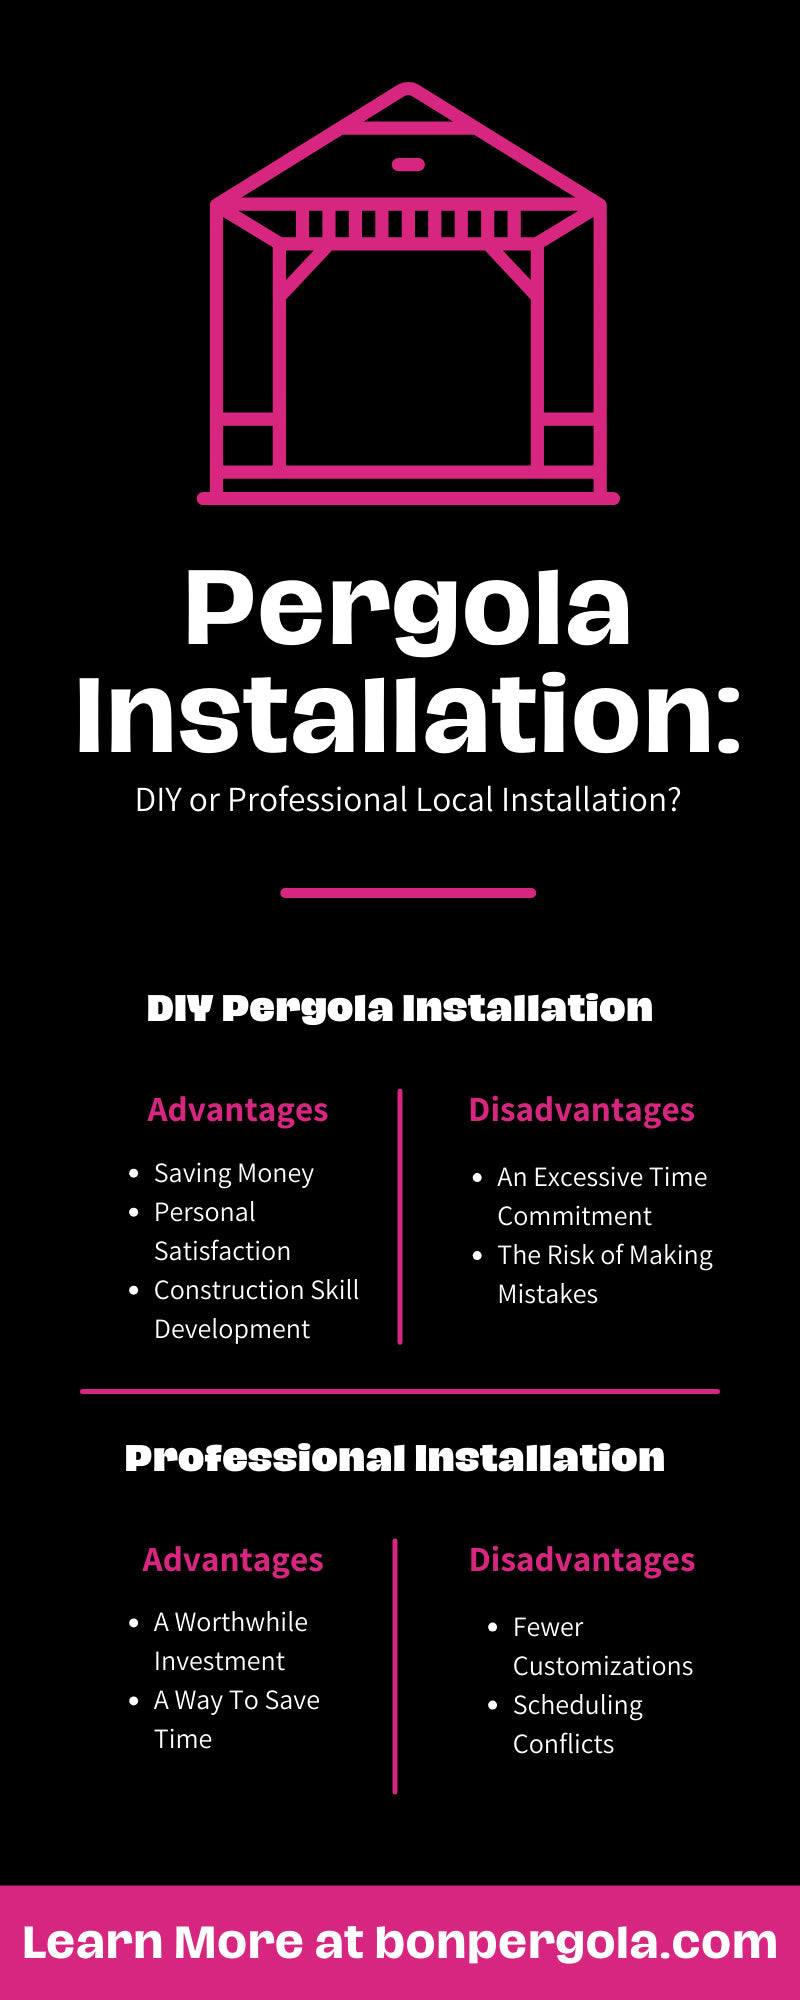 Pergola Installation: DIY or Professional Local Installation?